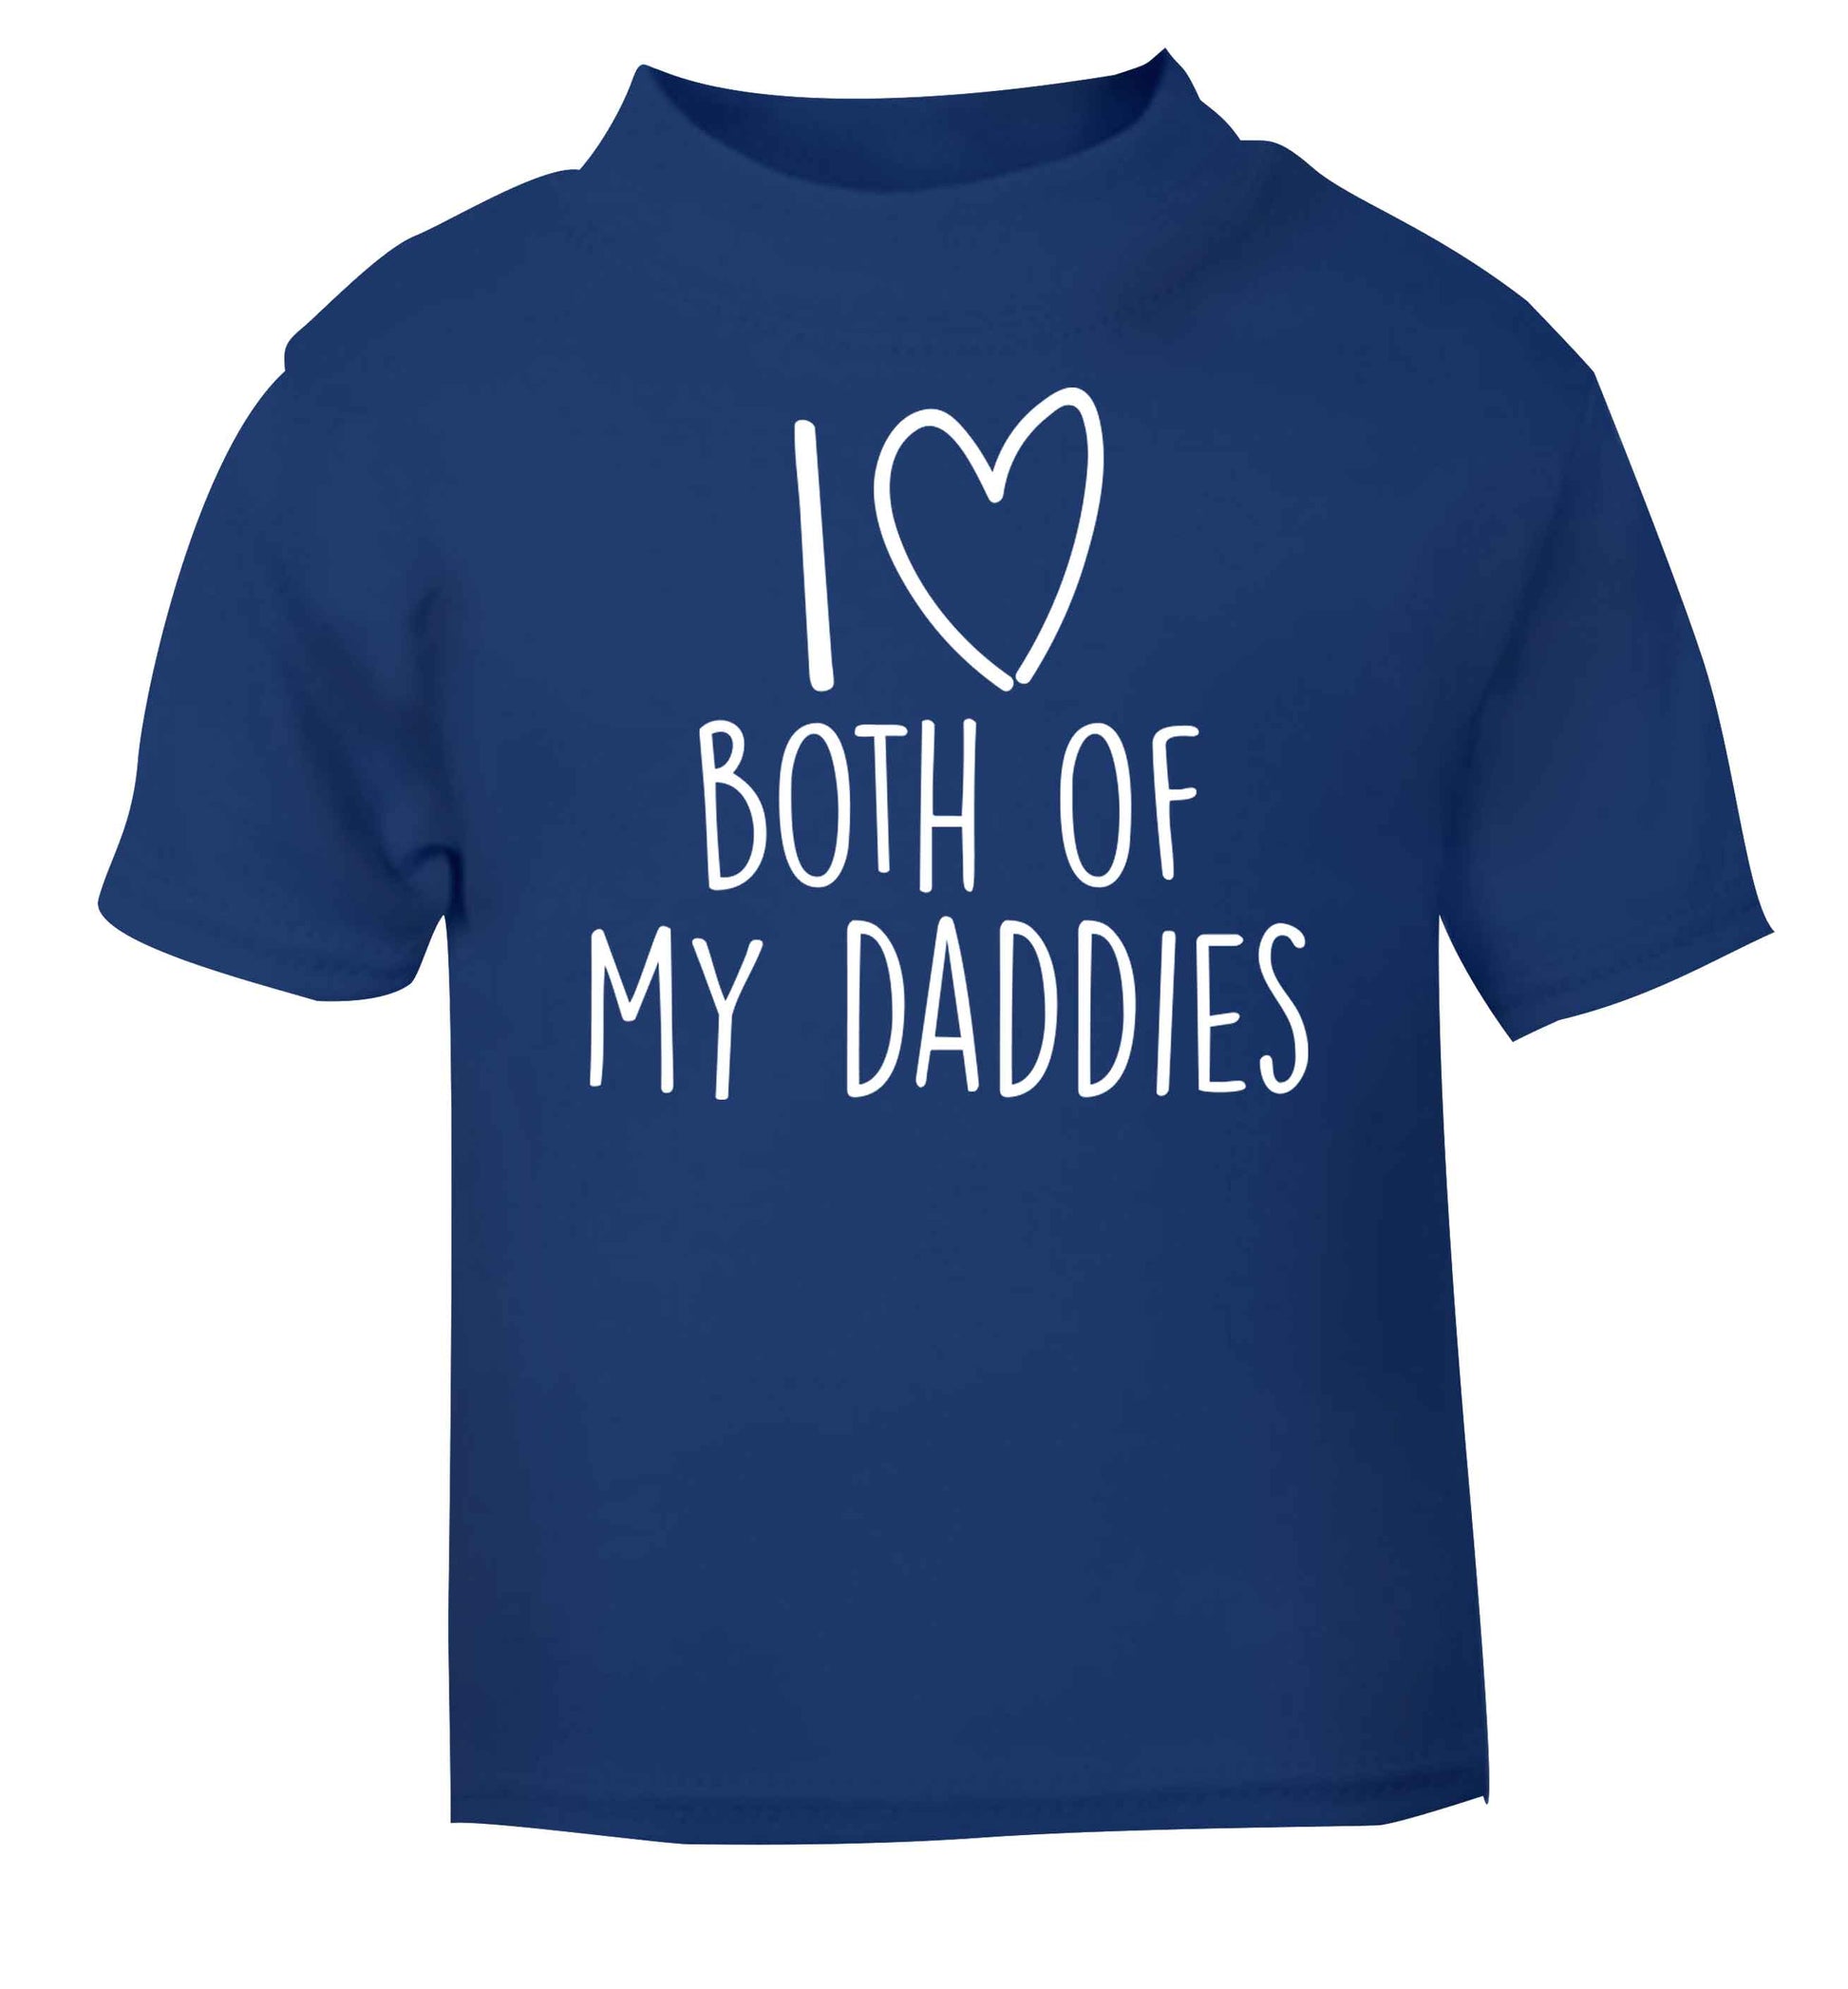 I love both of my daddies blue baby toddler Tshirt 2 Years